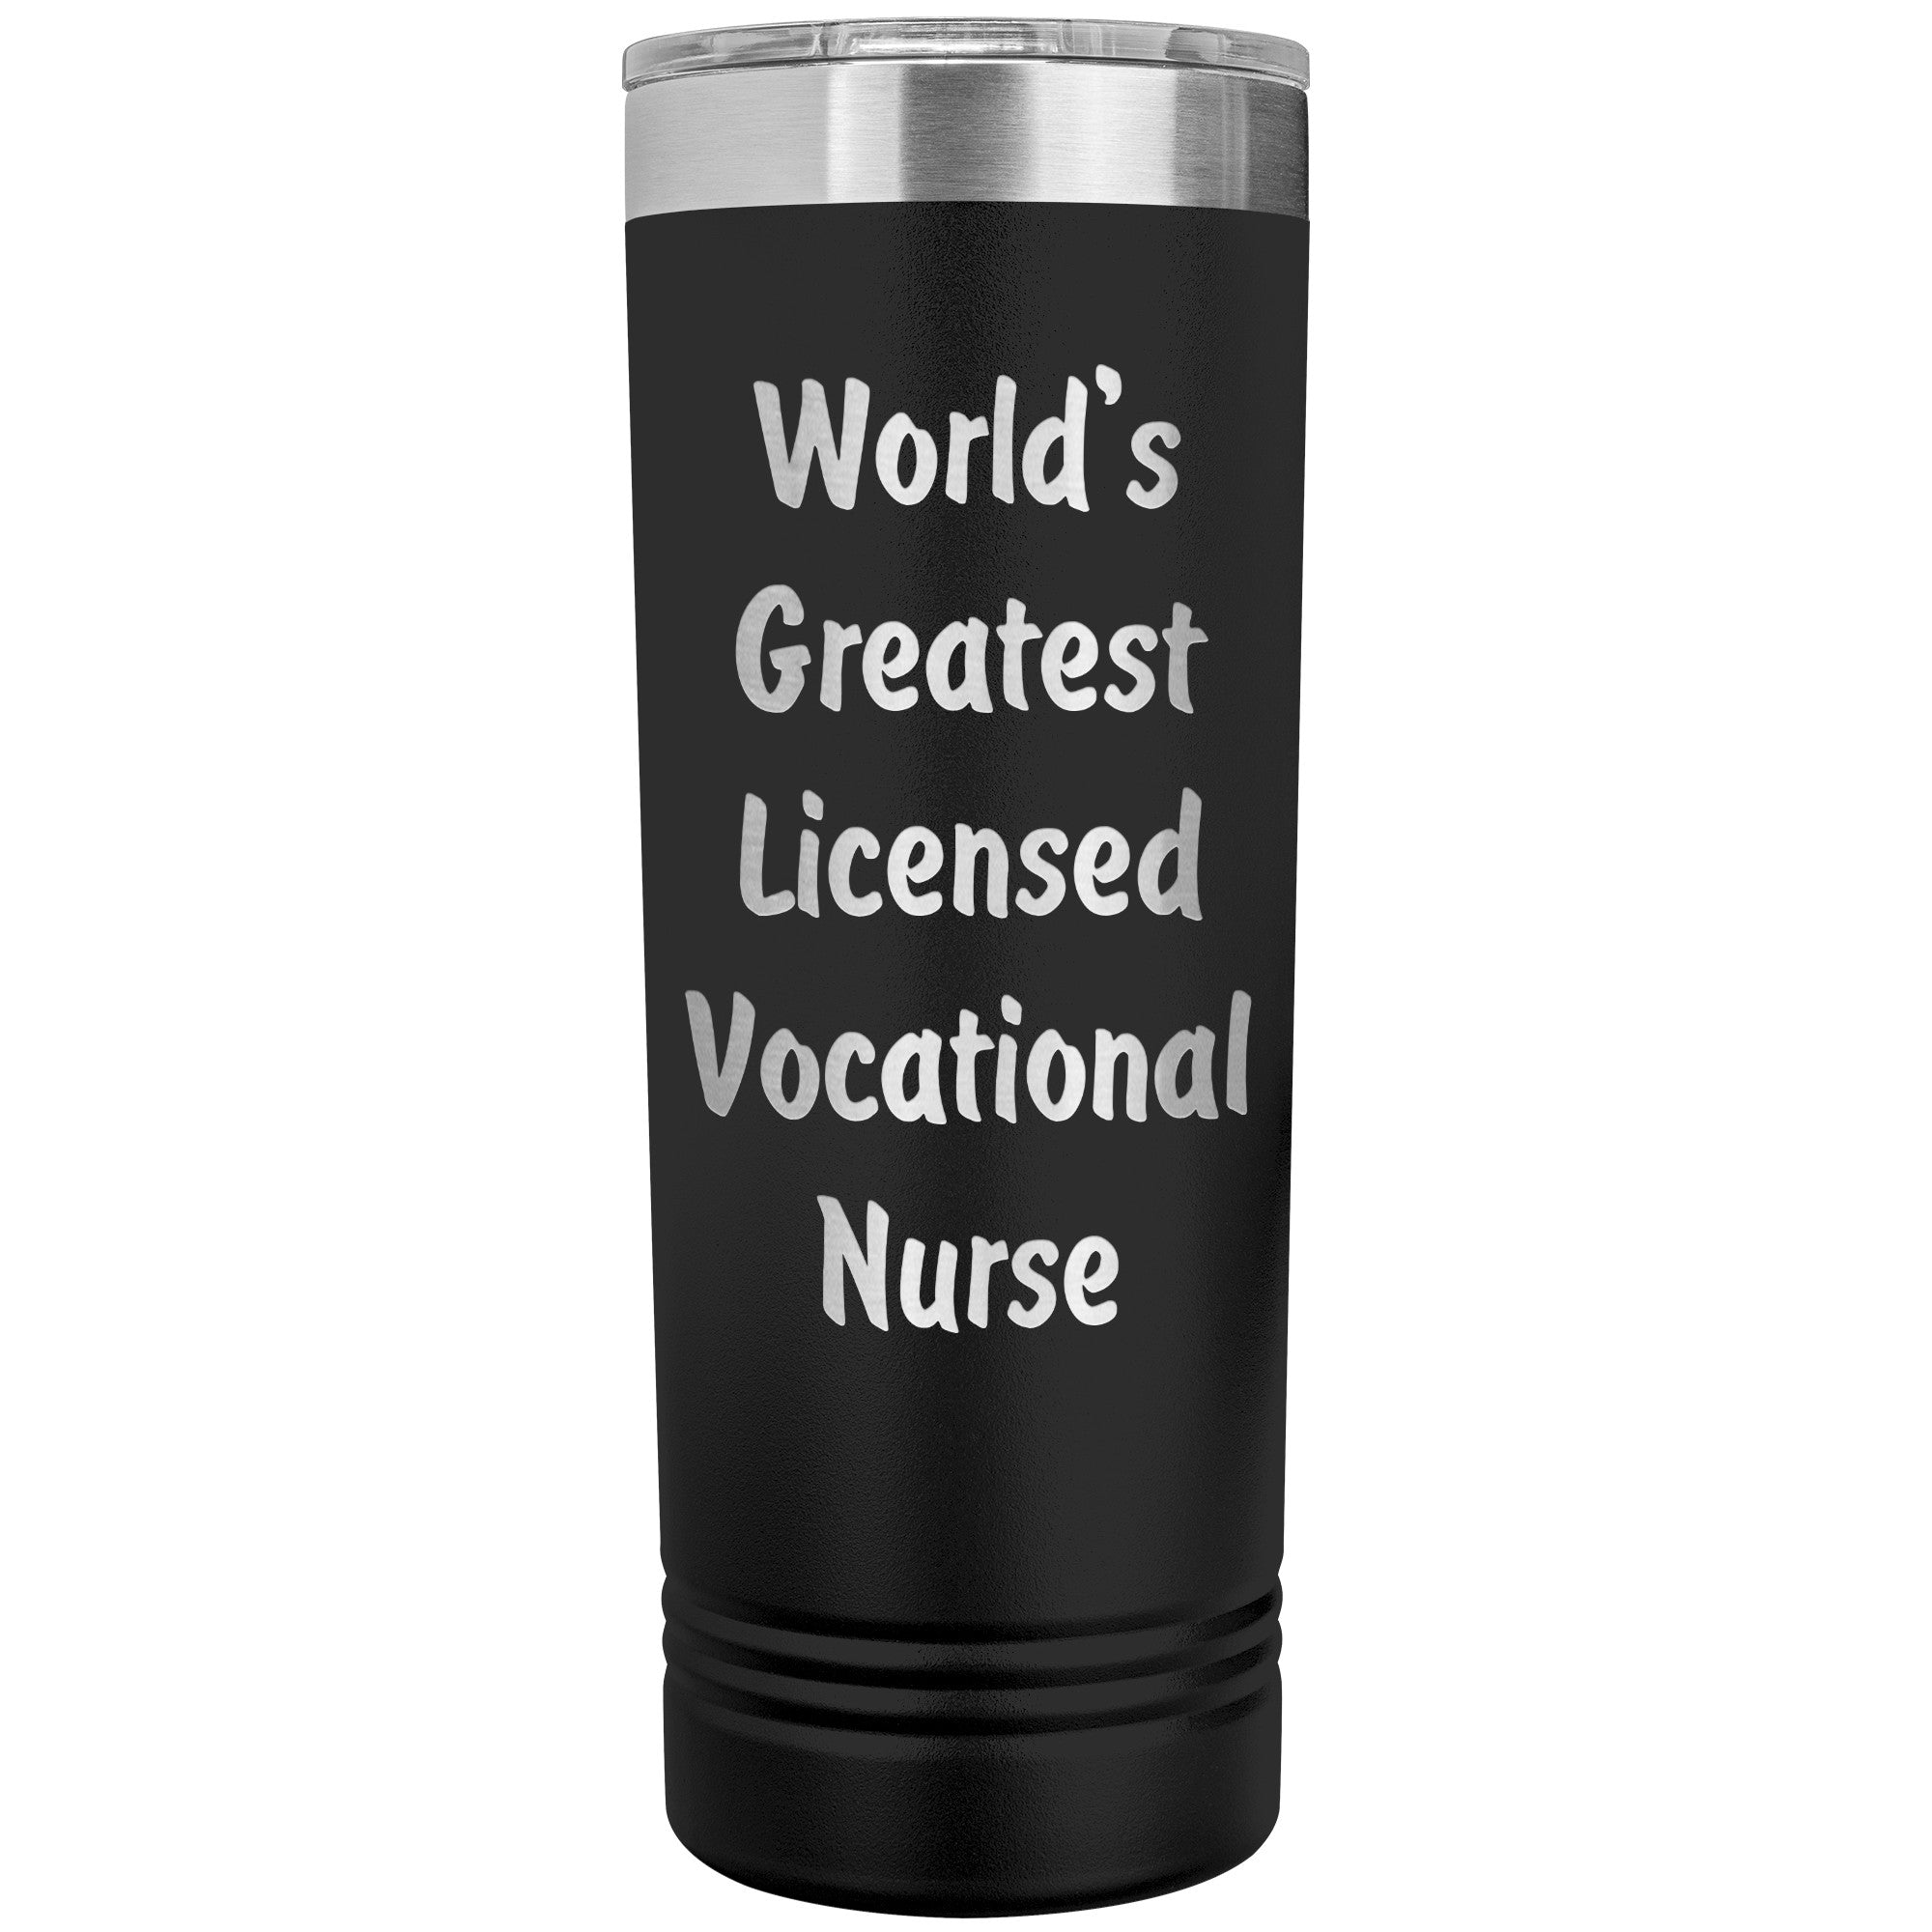 World's Greatest Licensed Vocational Nurse - 22oz Insulated Skinny Tumbler